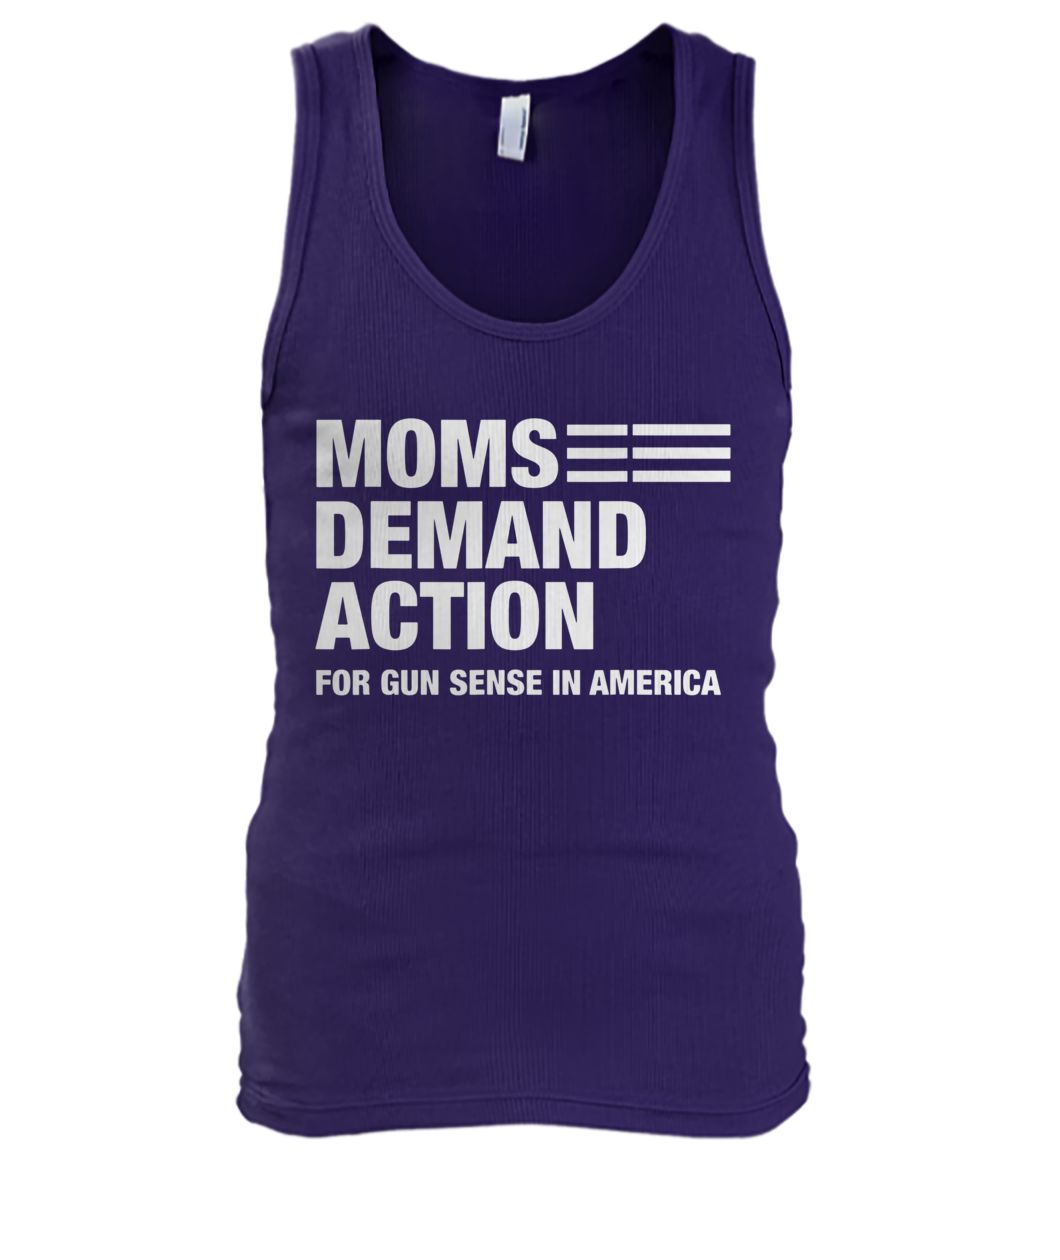 Moms demand action for gun sense in america men's tank top